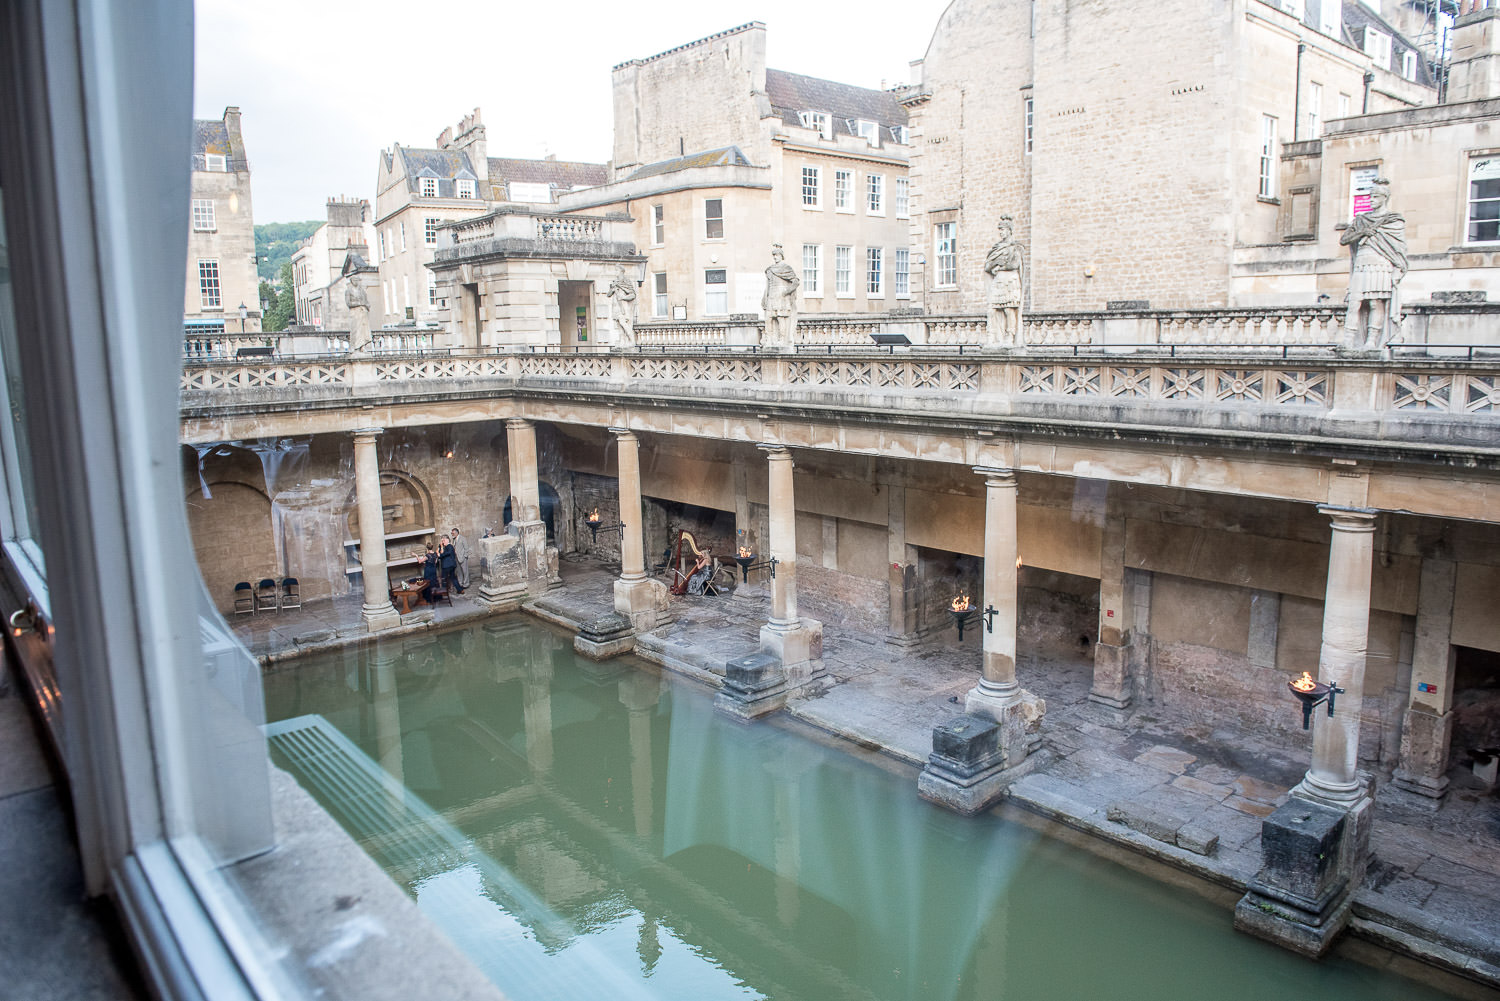 roman baths wedding photography bath